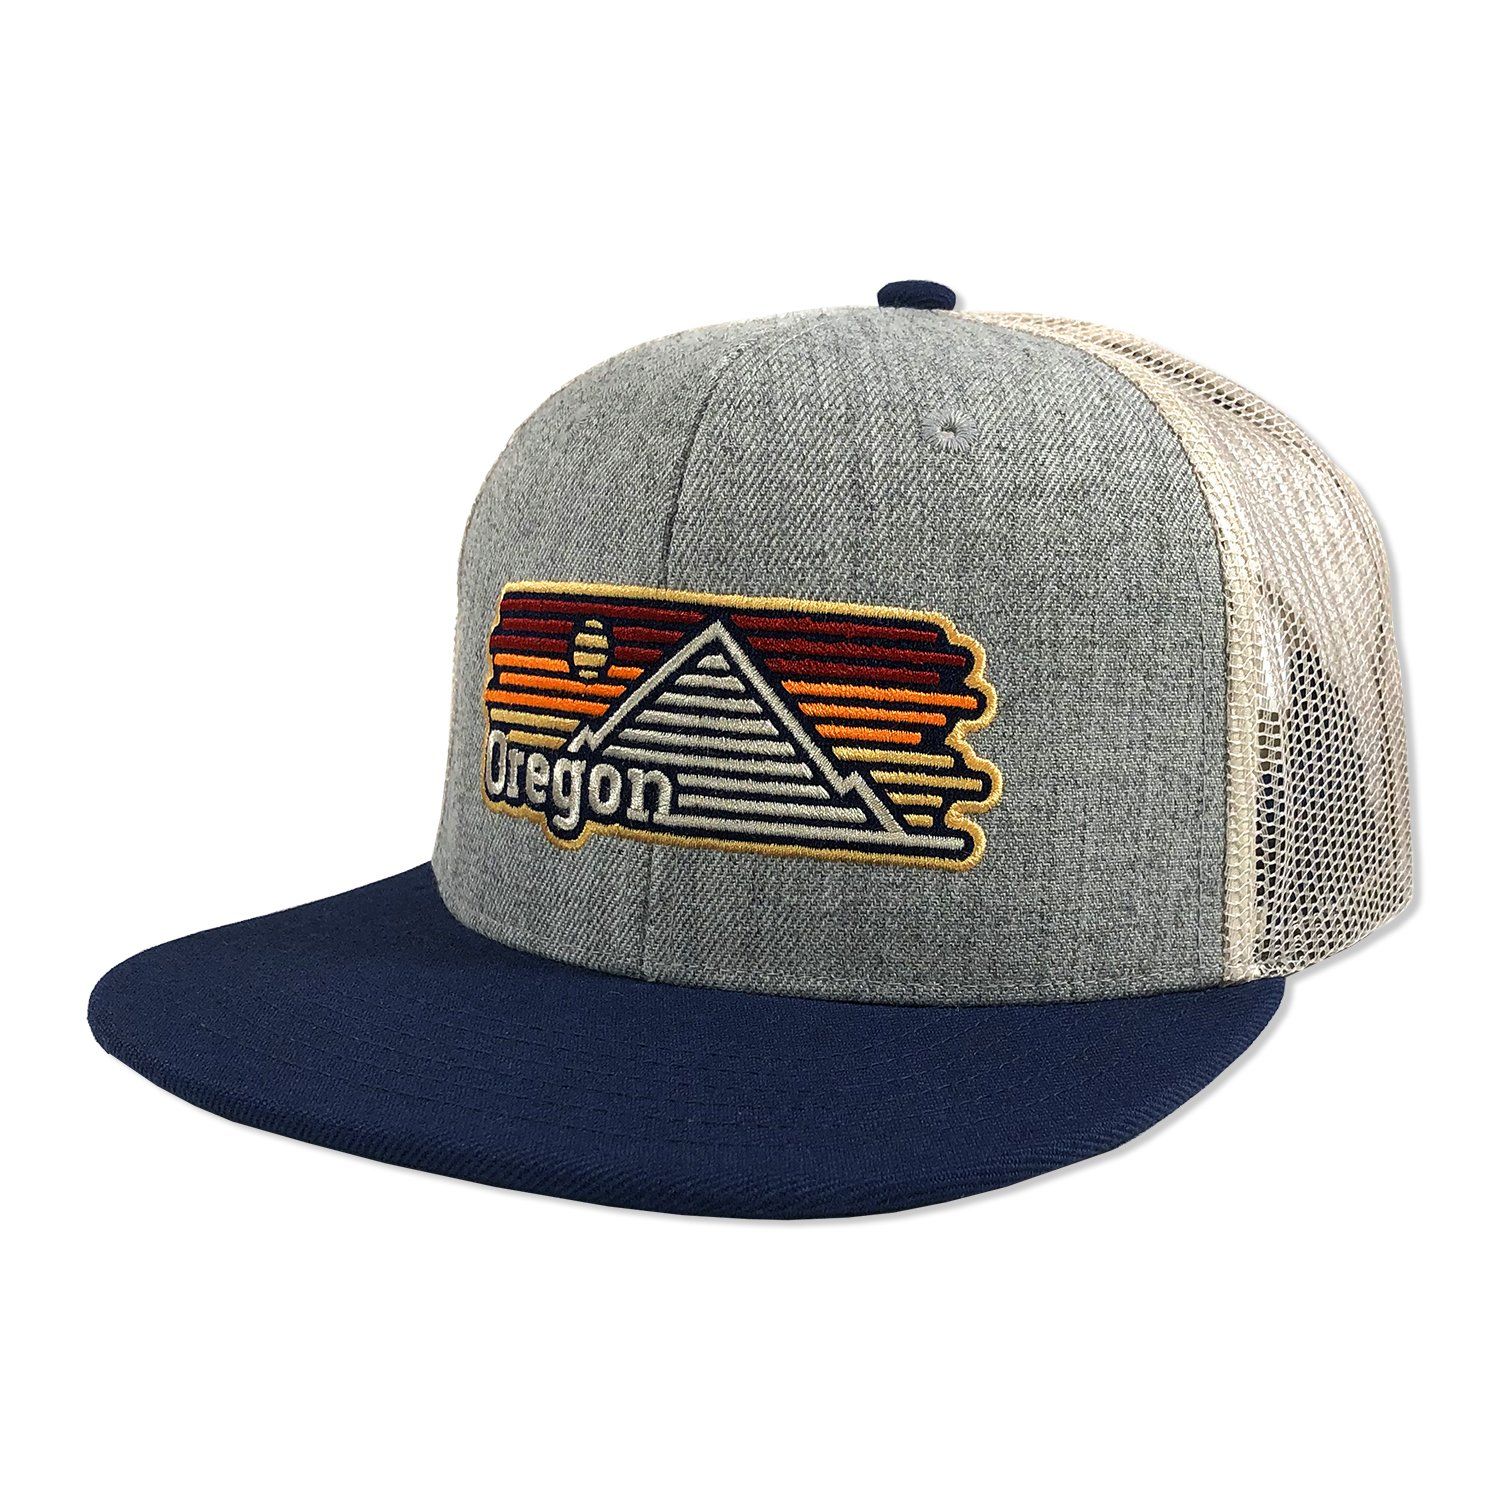 Oregon Horizons | Trucker Hat